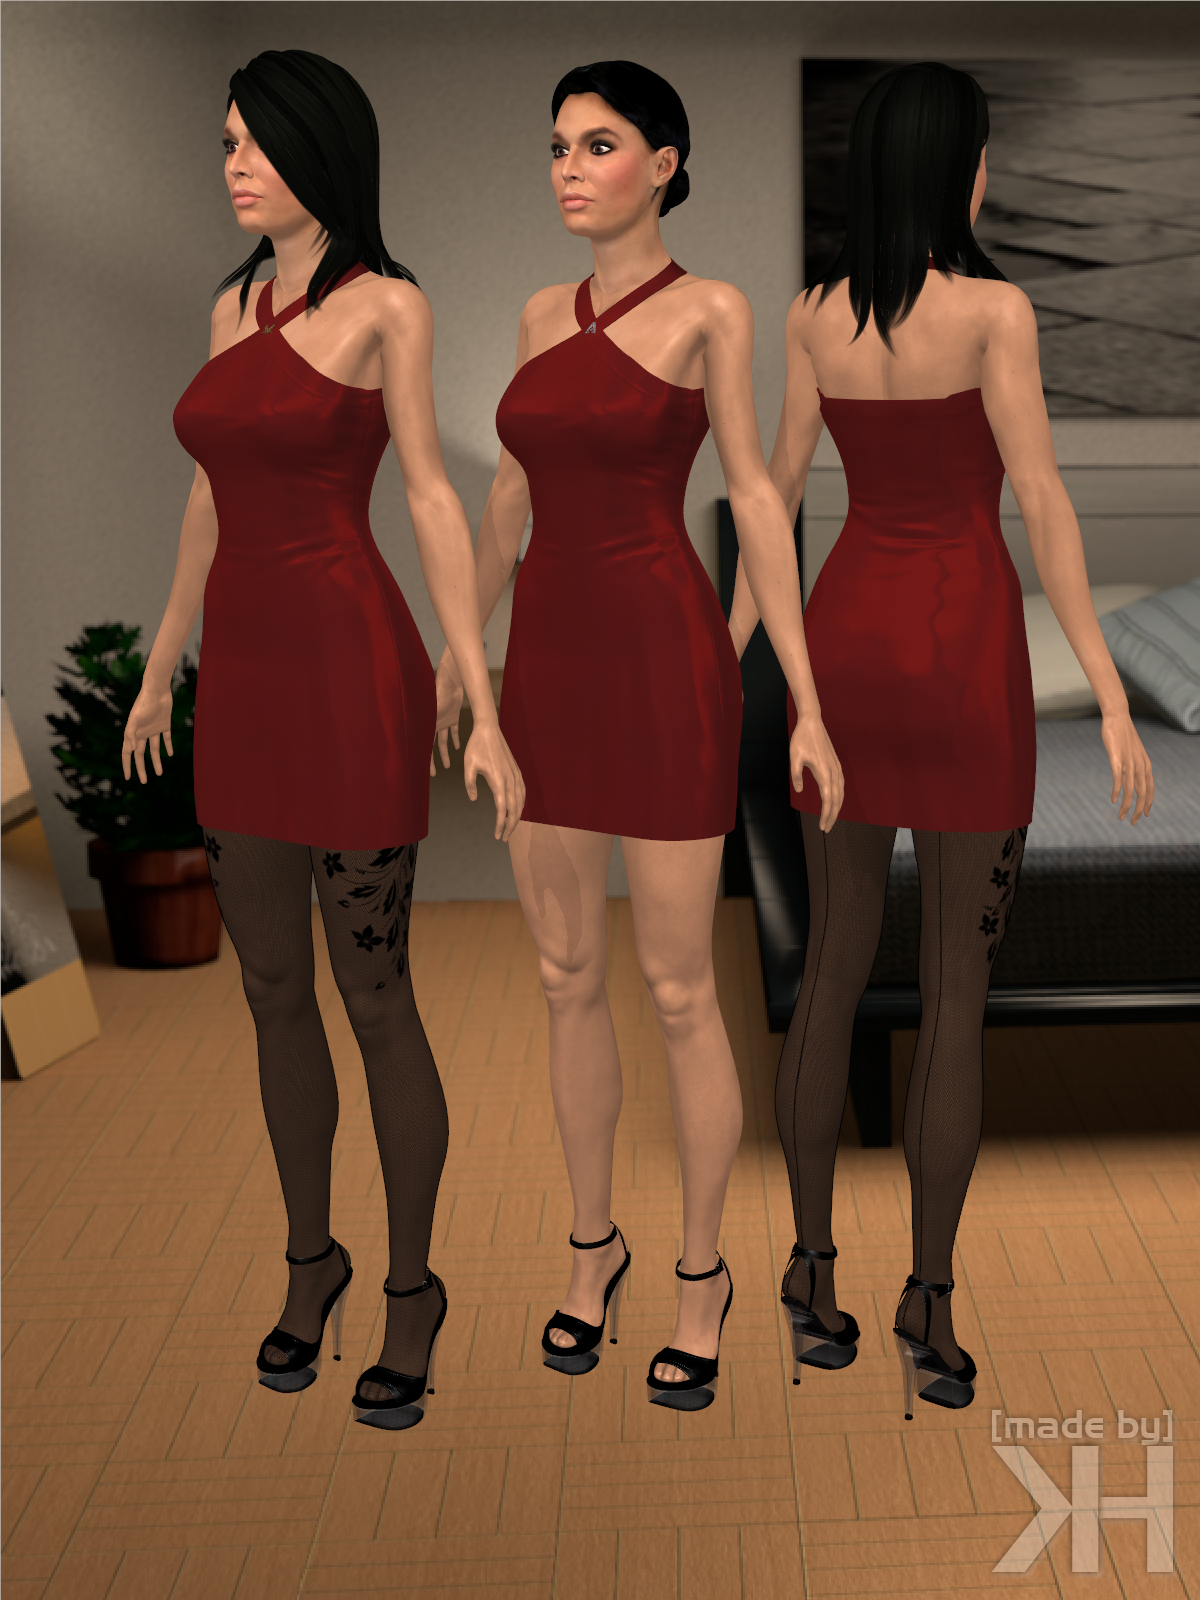 Ashley Williams Party Dress (XPS) by Grummel83 on DeviantArt